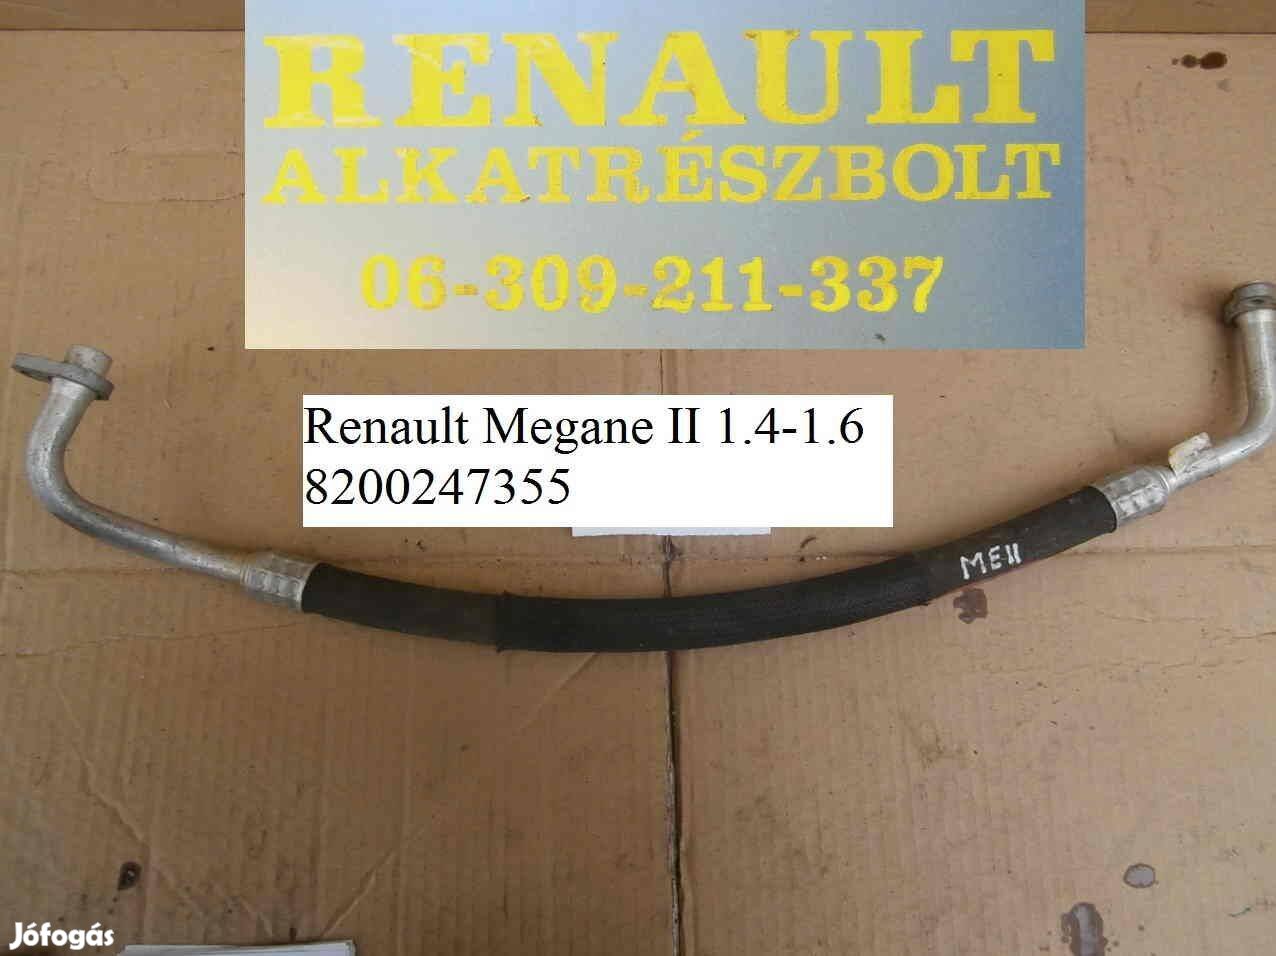 Renault Megane II. 1.4-1.6 klímacső 8200247355